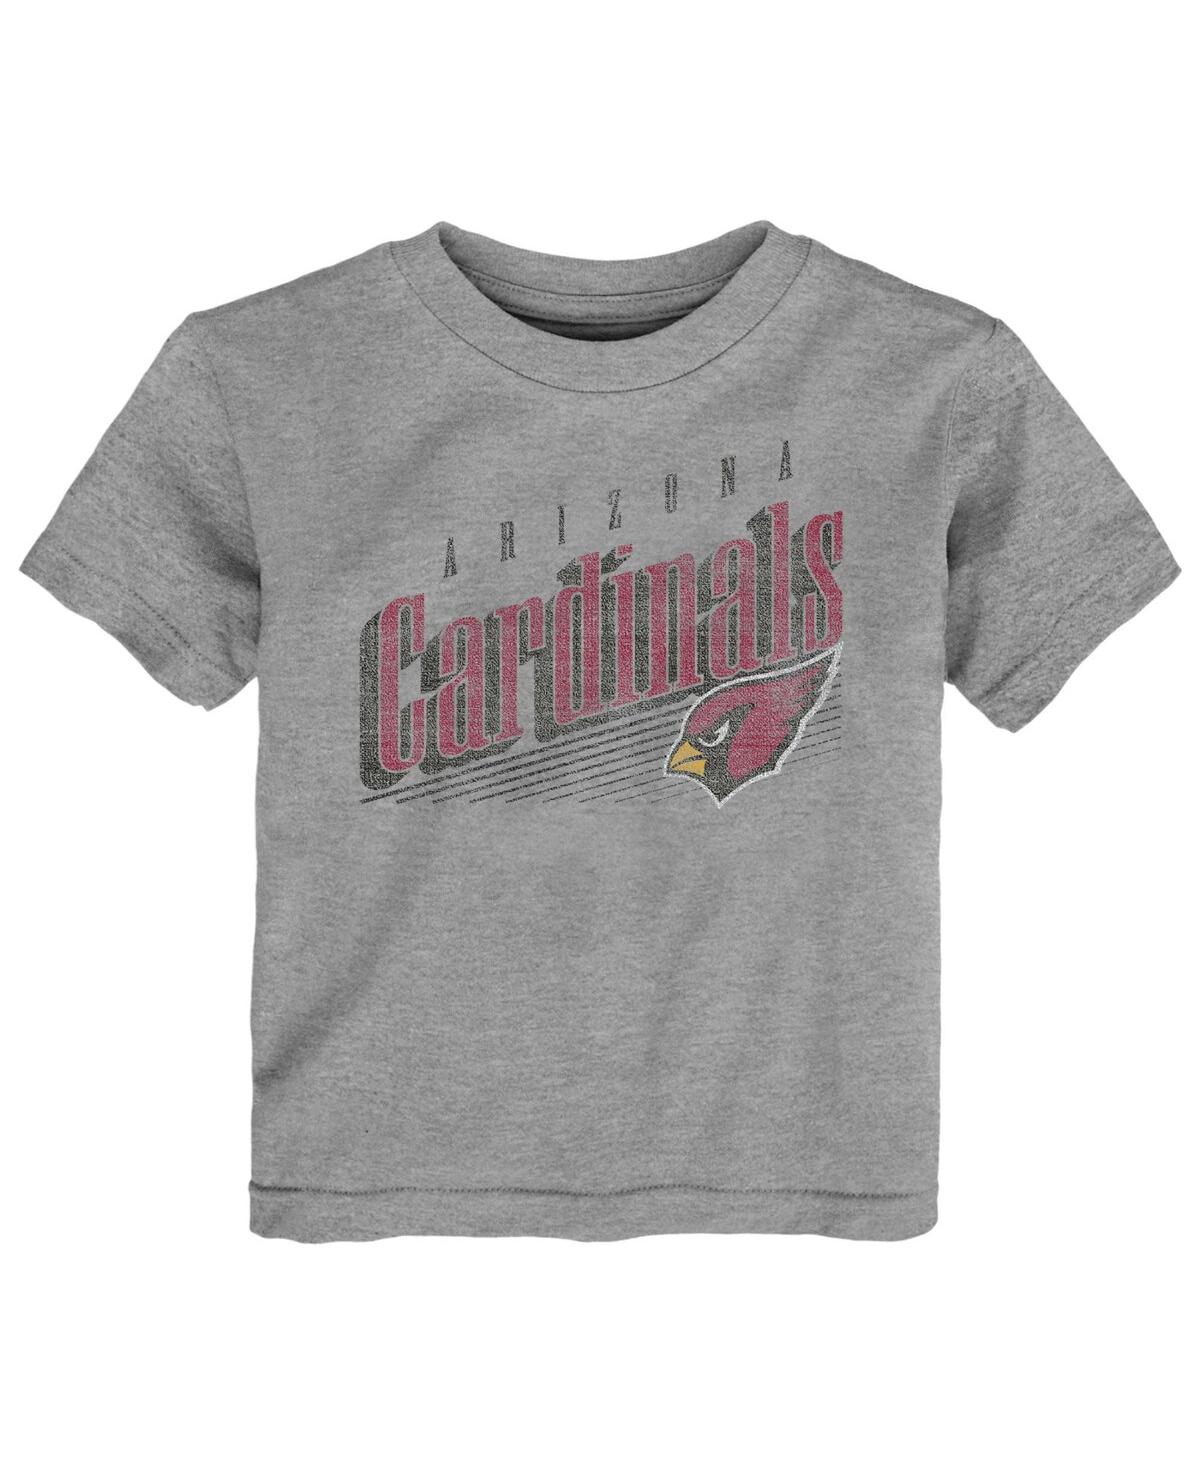 Shop Outerstuff Toddler Boys And Girls Heathered Gray Arizona Cardinals Winning Streak T-shirt